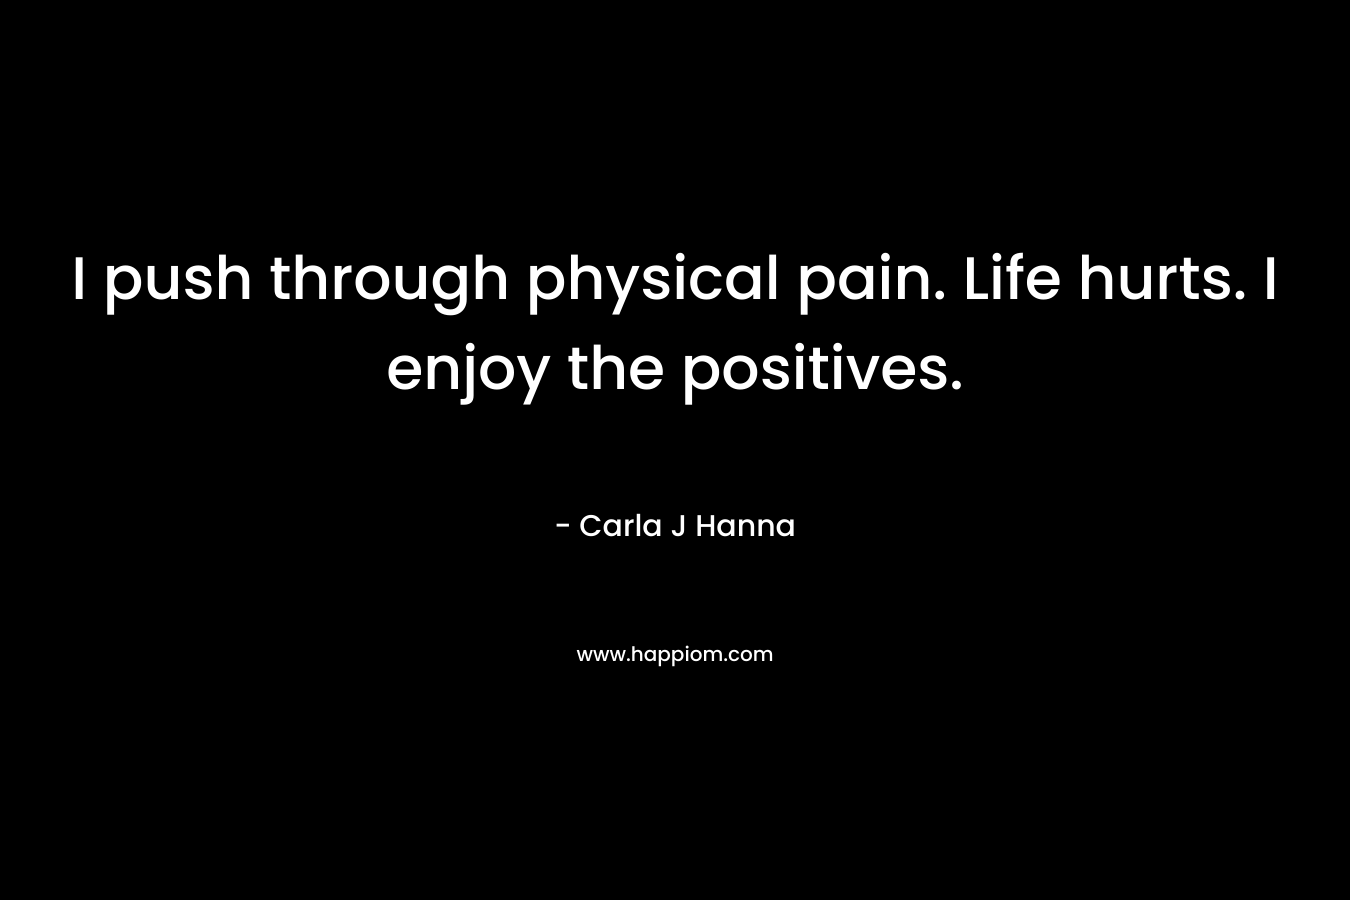 I push through physical pain. Life hurts. I enjoy the positives.